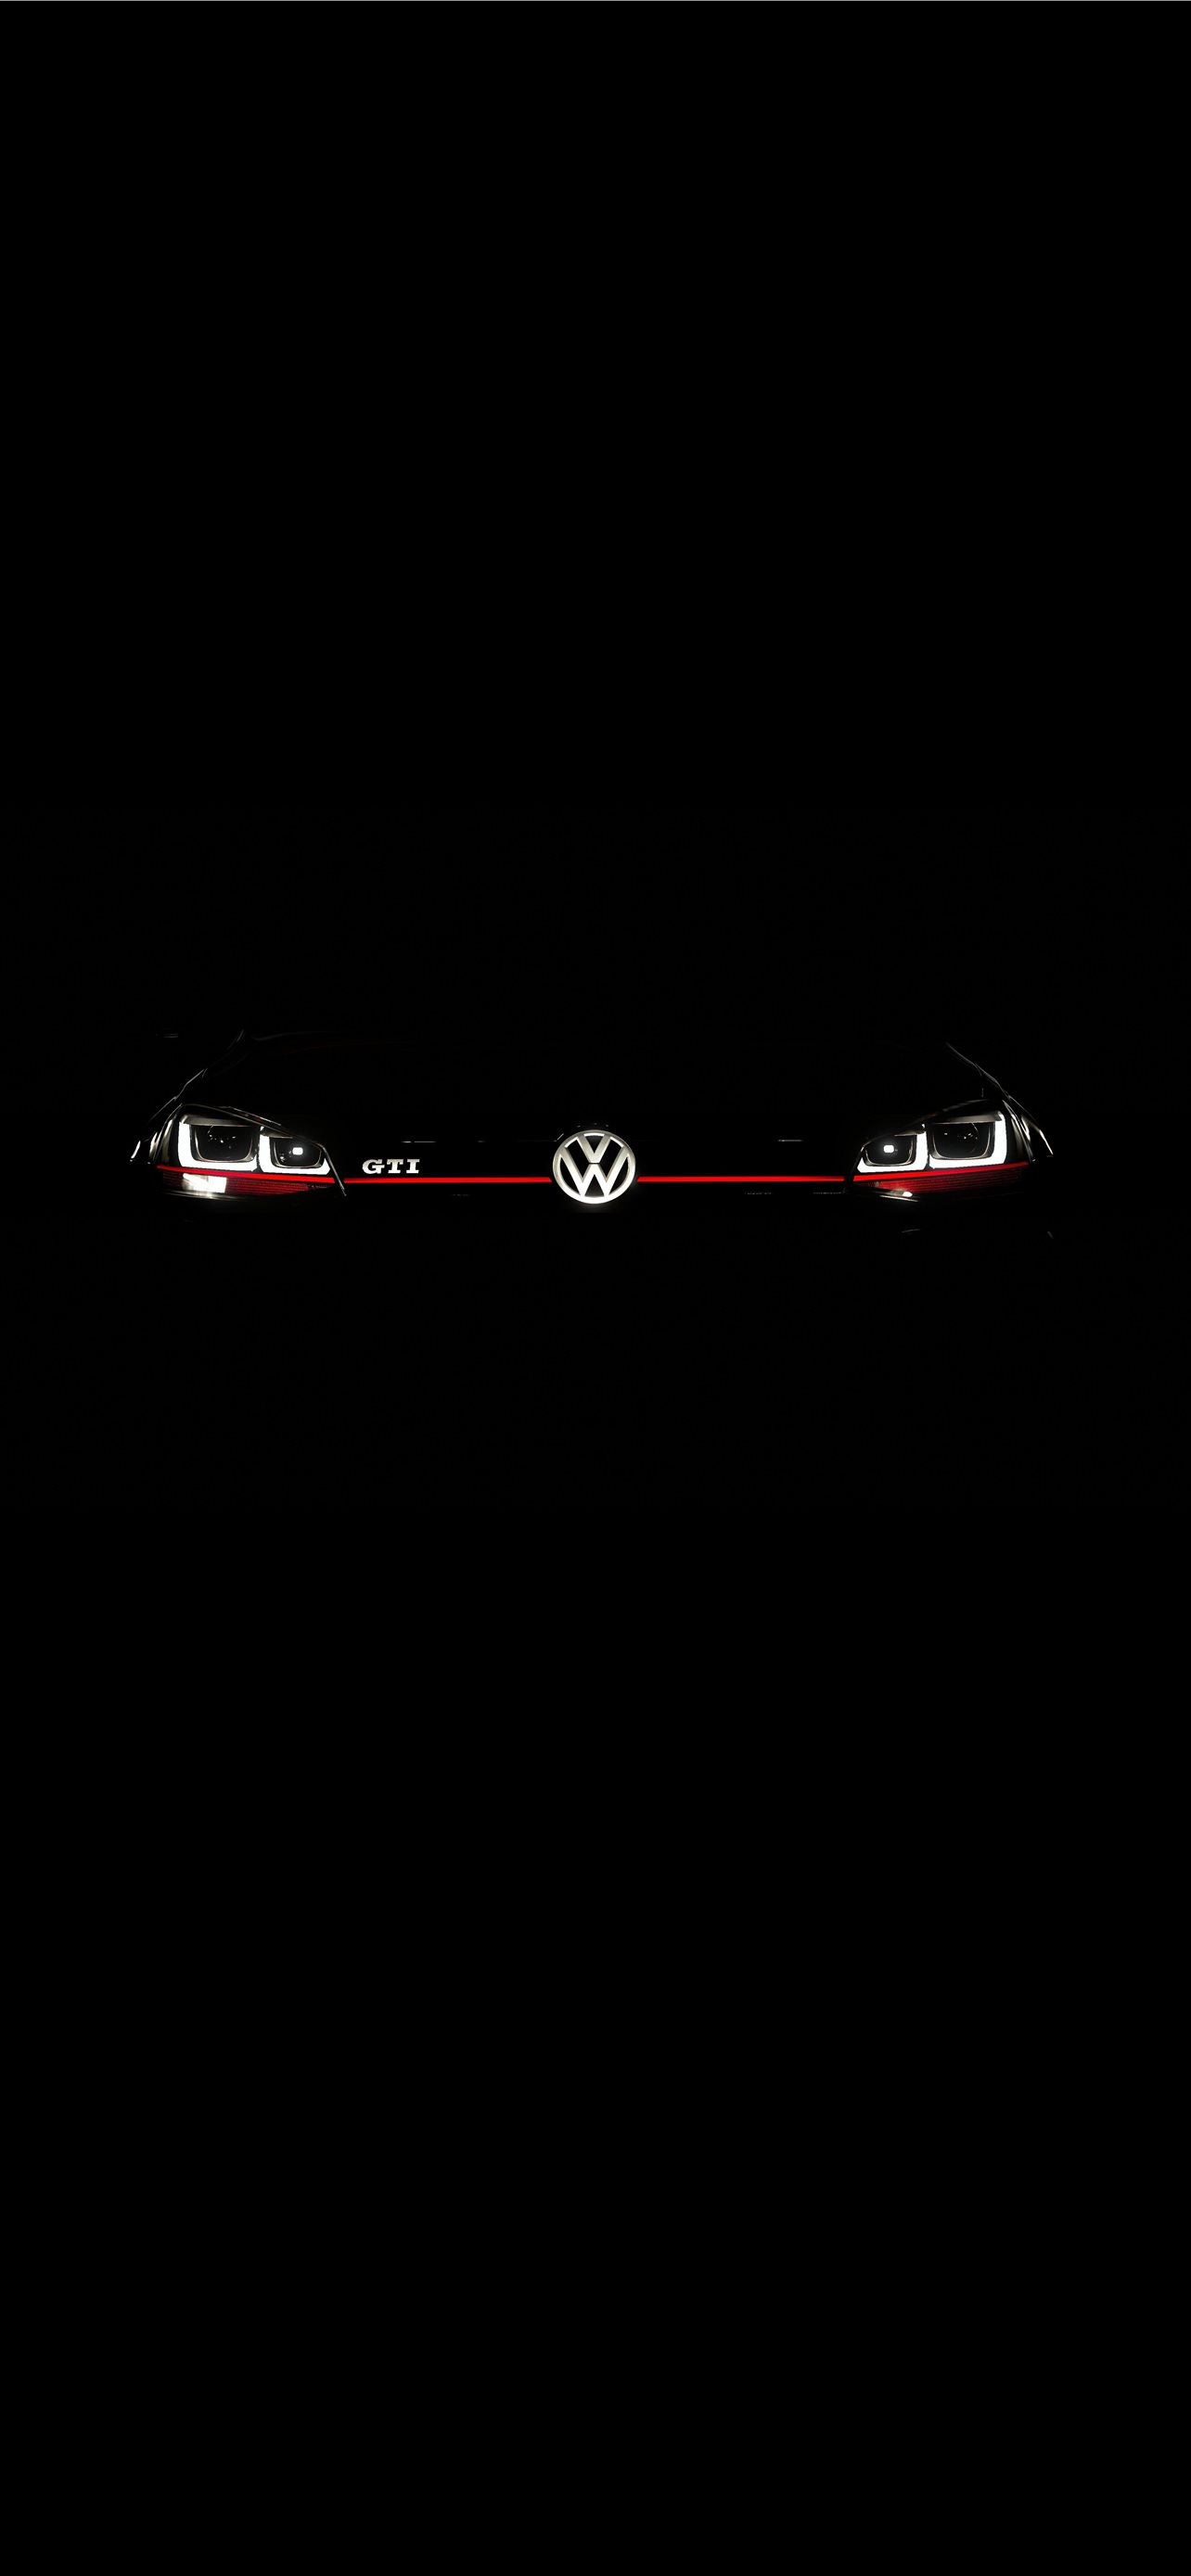 49 Volkswagen Logo Wallpaper on WallpaperSafari  Volkswagen logo  Volkswagen Car wallpapers